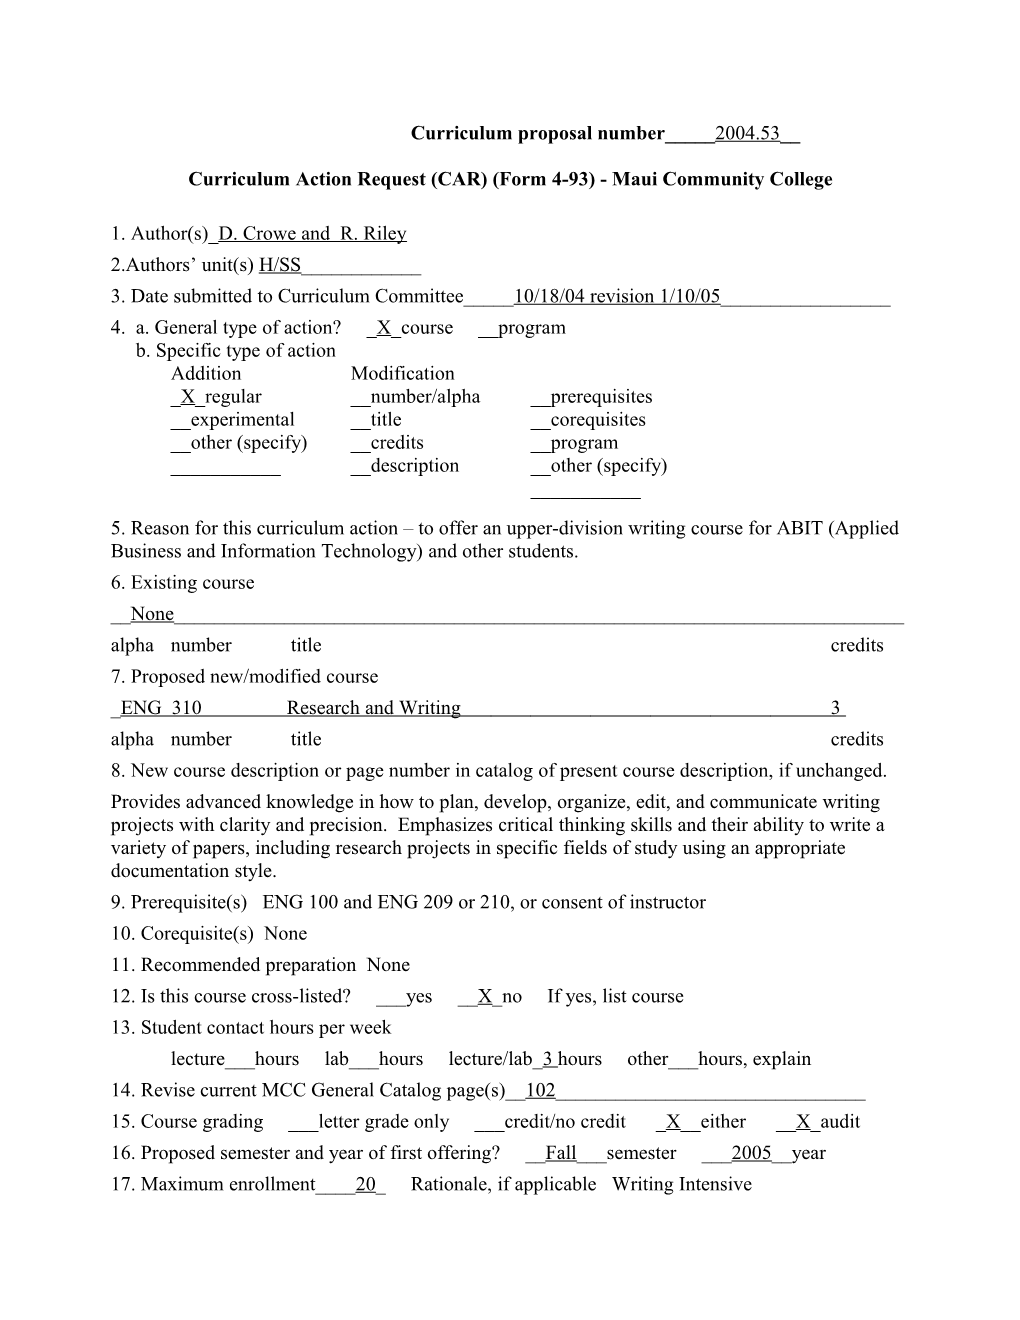 Curriculum Action Request (CAR) (Form 4-93) - Maui Community College s2